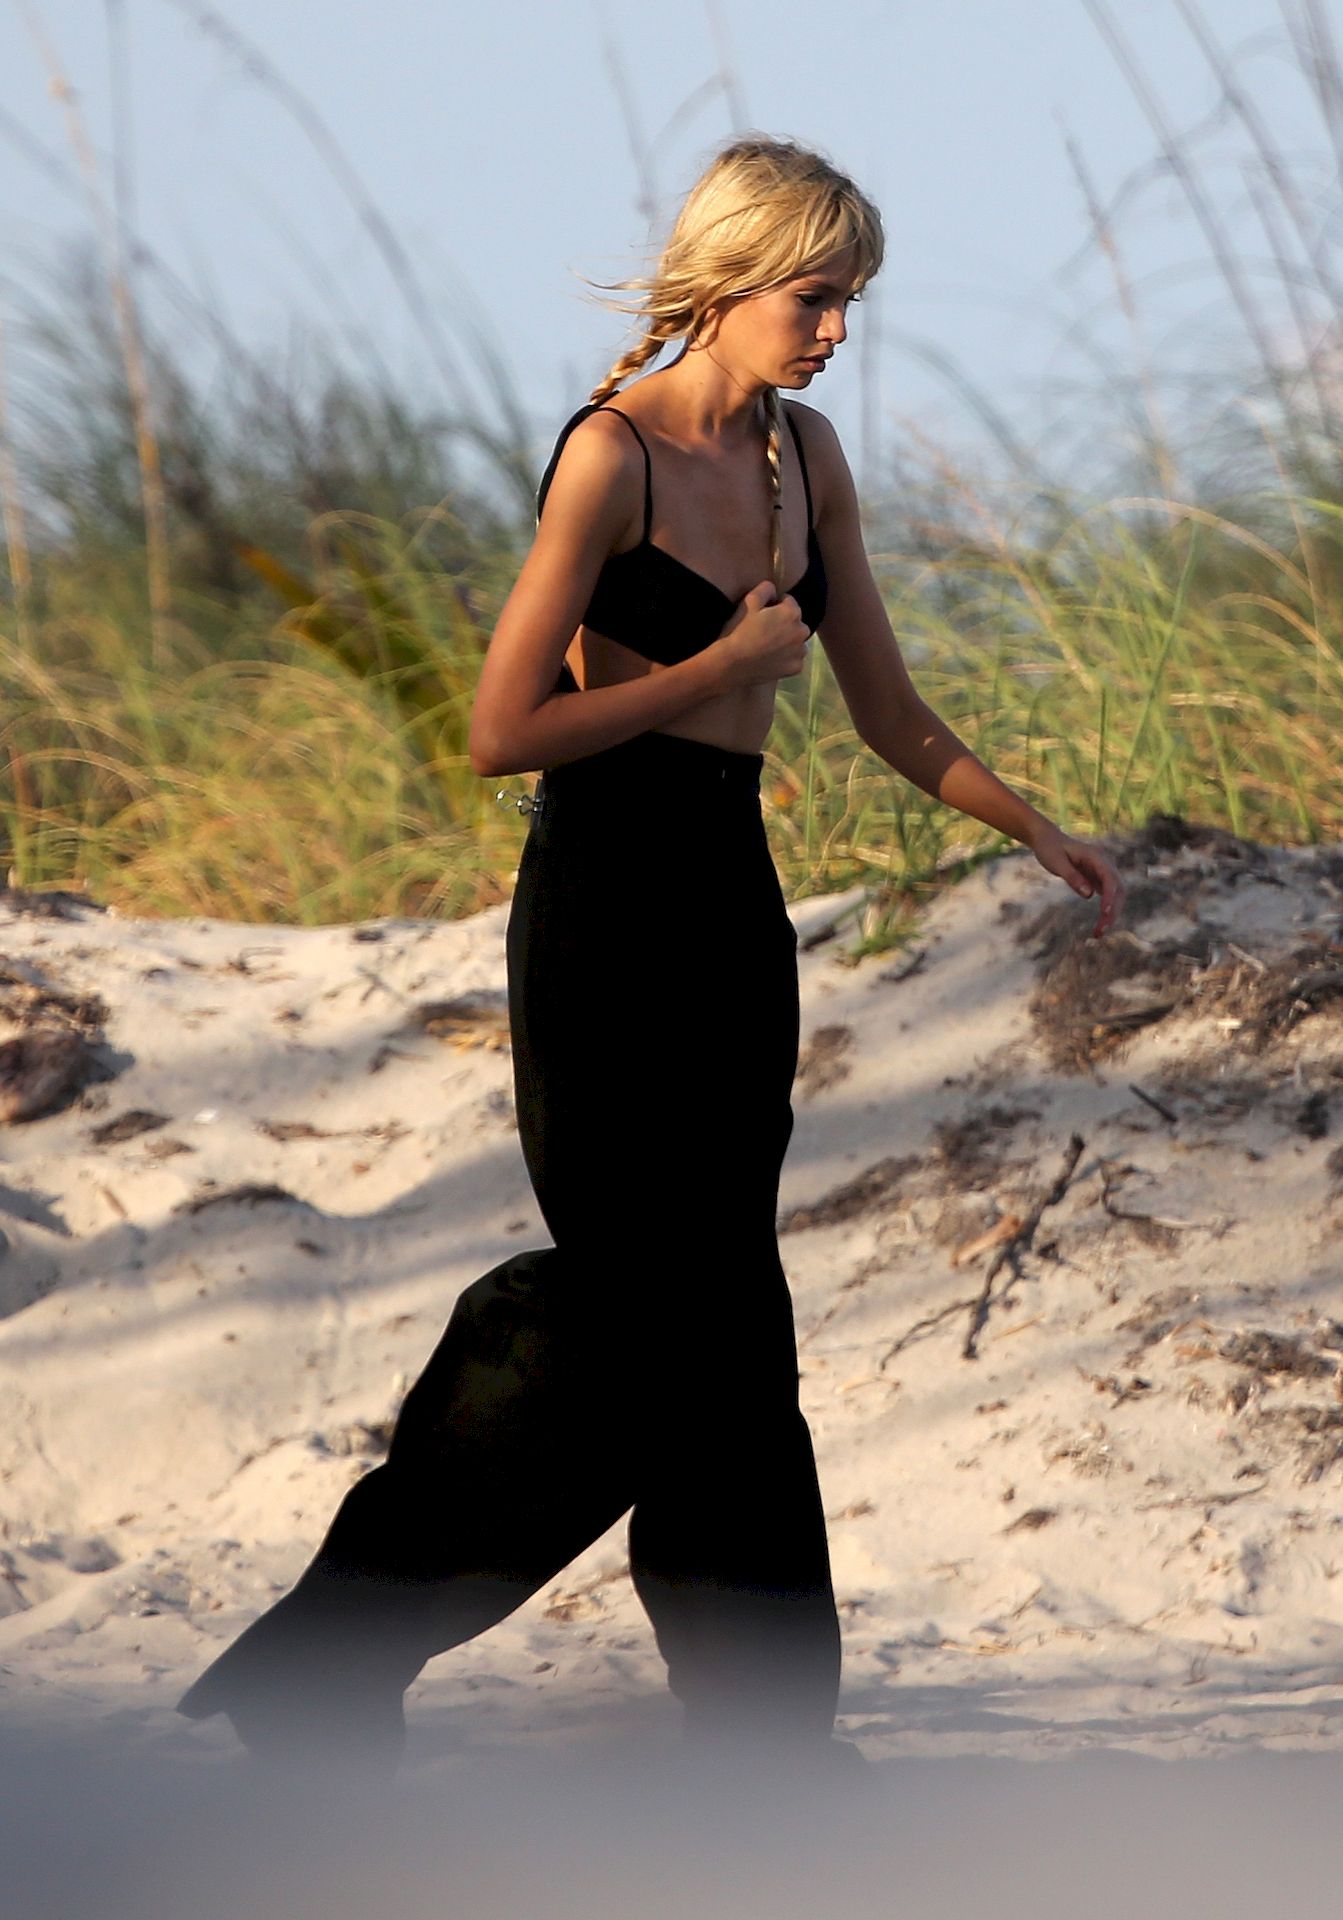 Stella-Maxwell-Wears-a-Black-String-Bikini-During-a-Photoshoot-in-Miami-0009.jpg